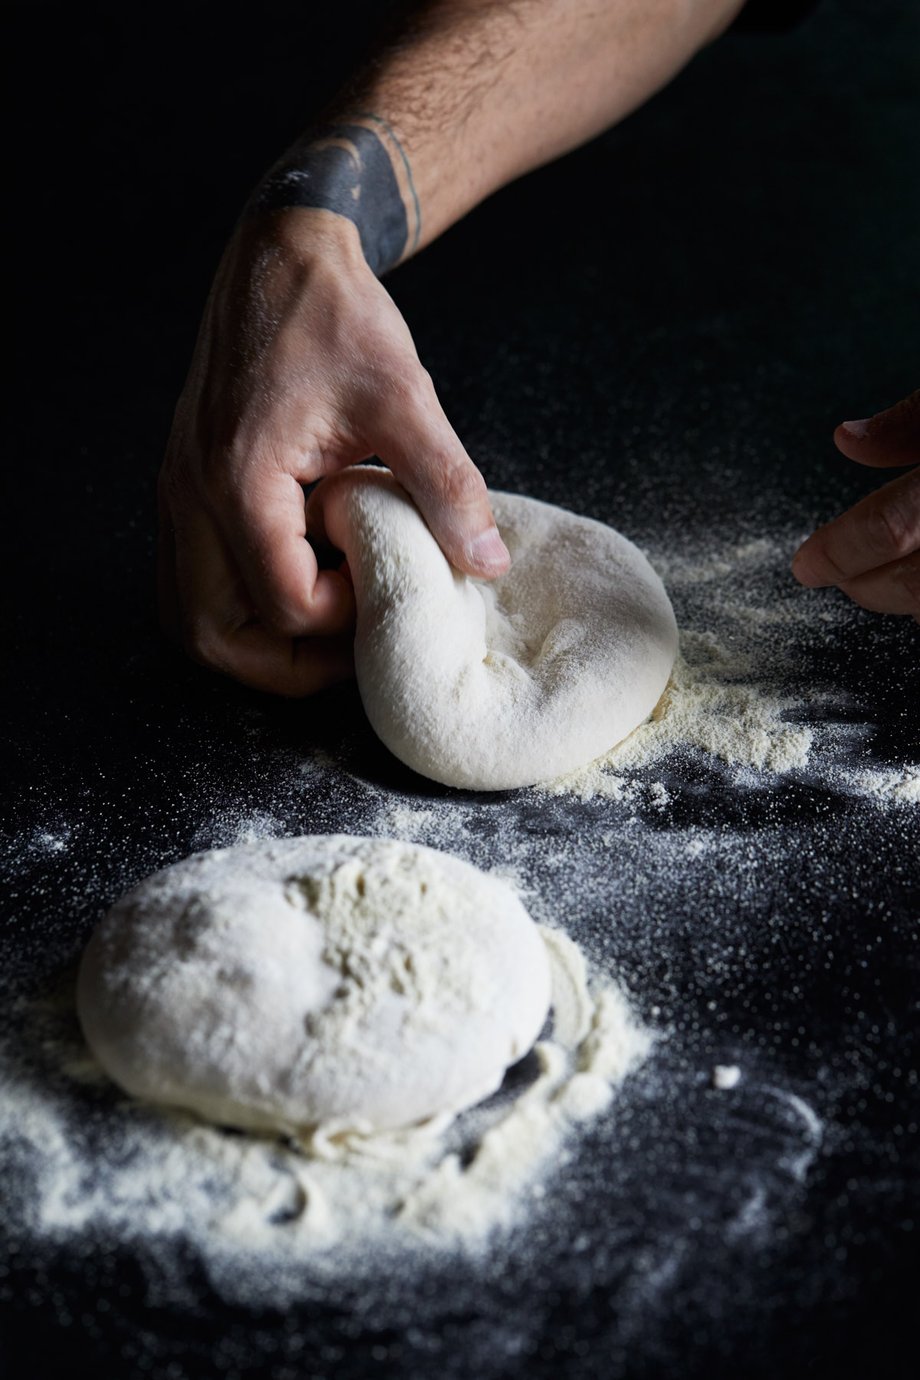 Jody Horton's shot of a kitchen employee kneading dough